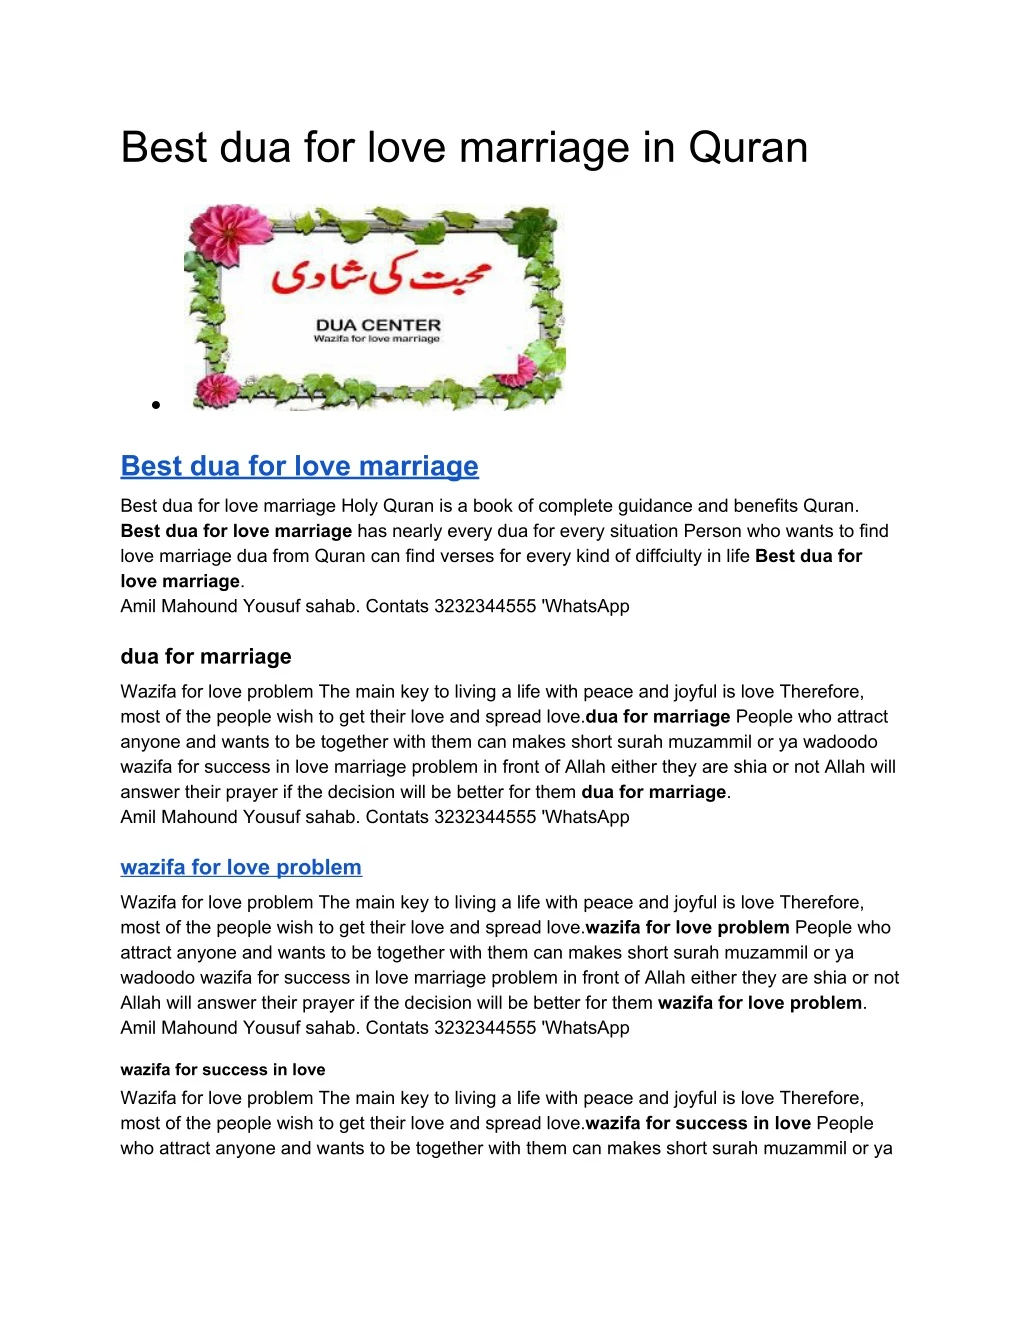 best dua for love marriage in quran